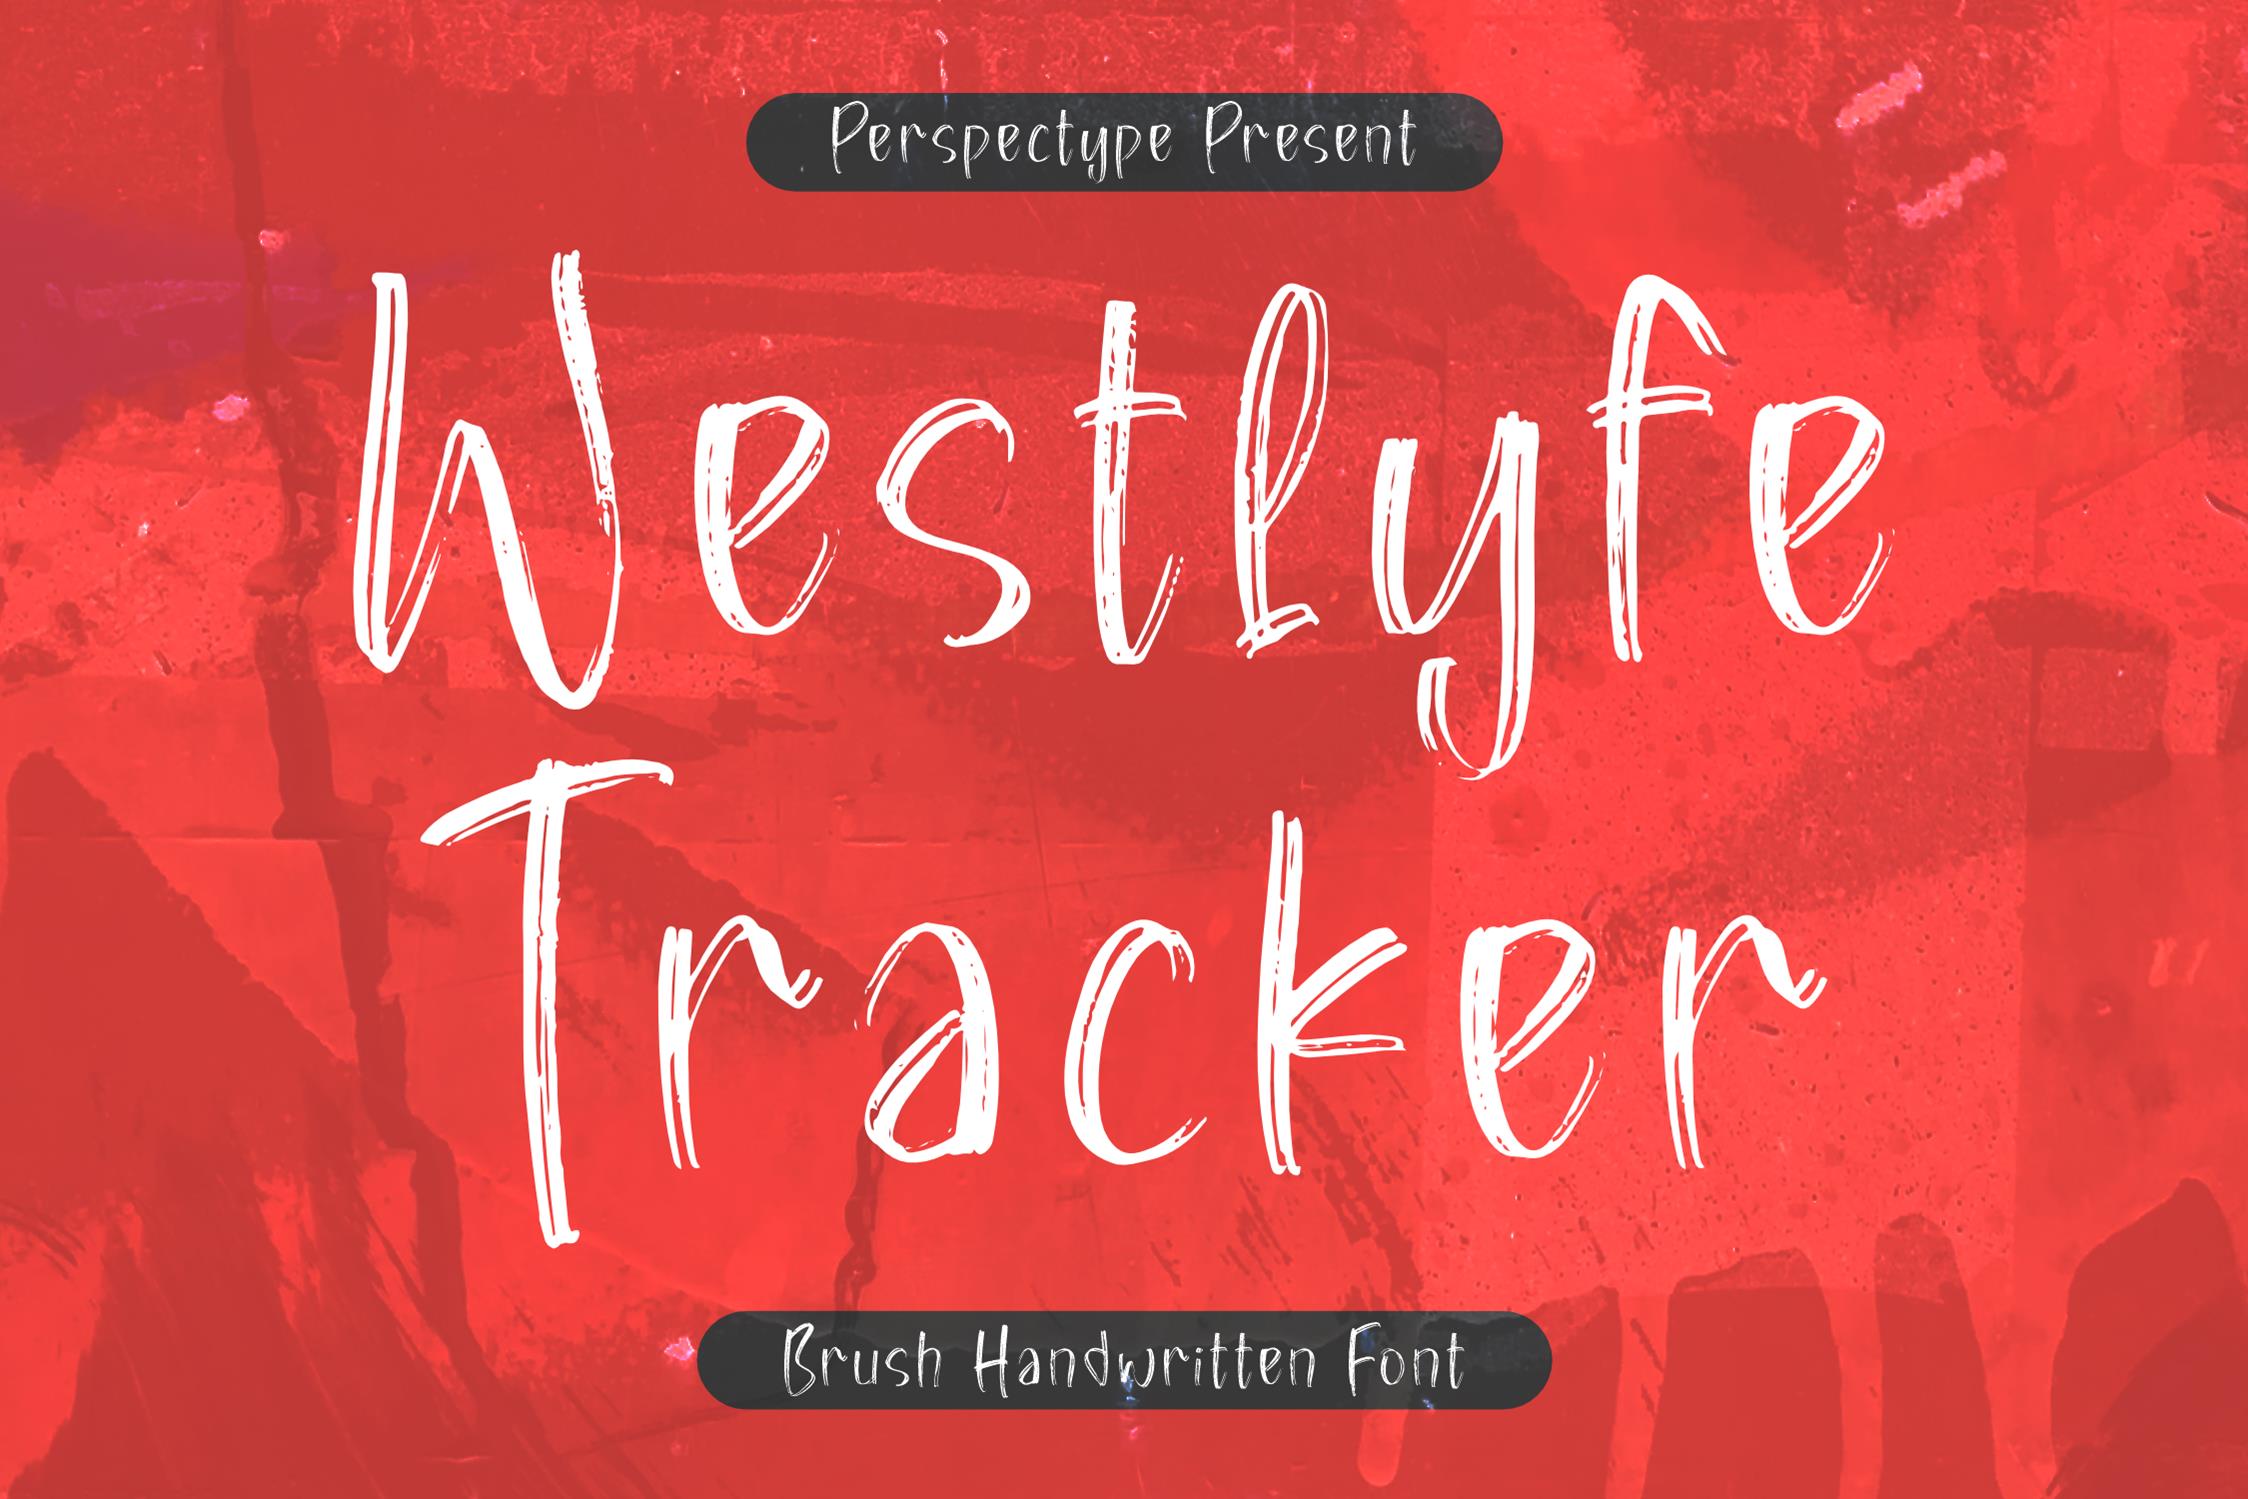 Westlyfe Tracker Free Font